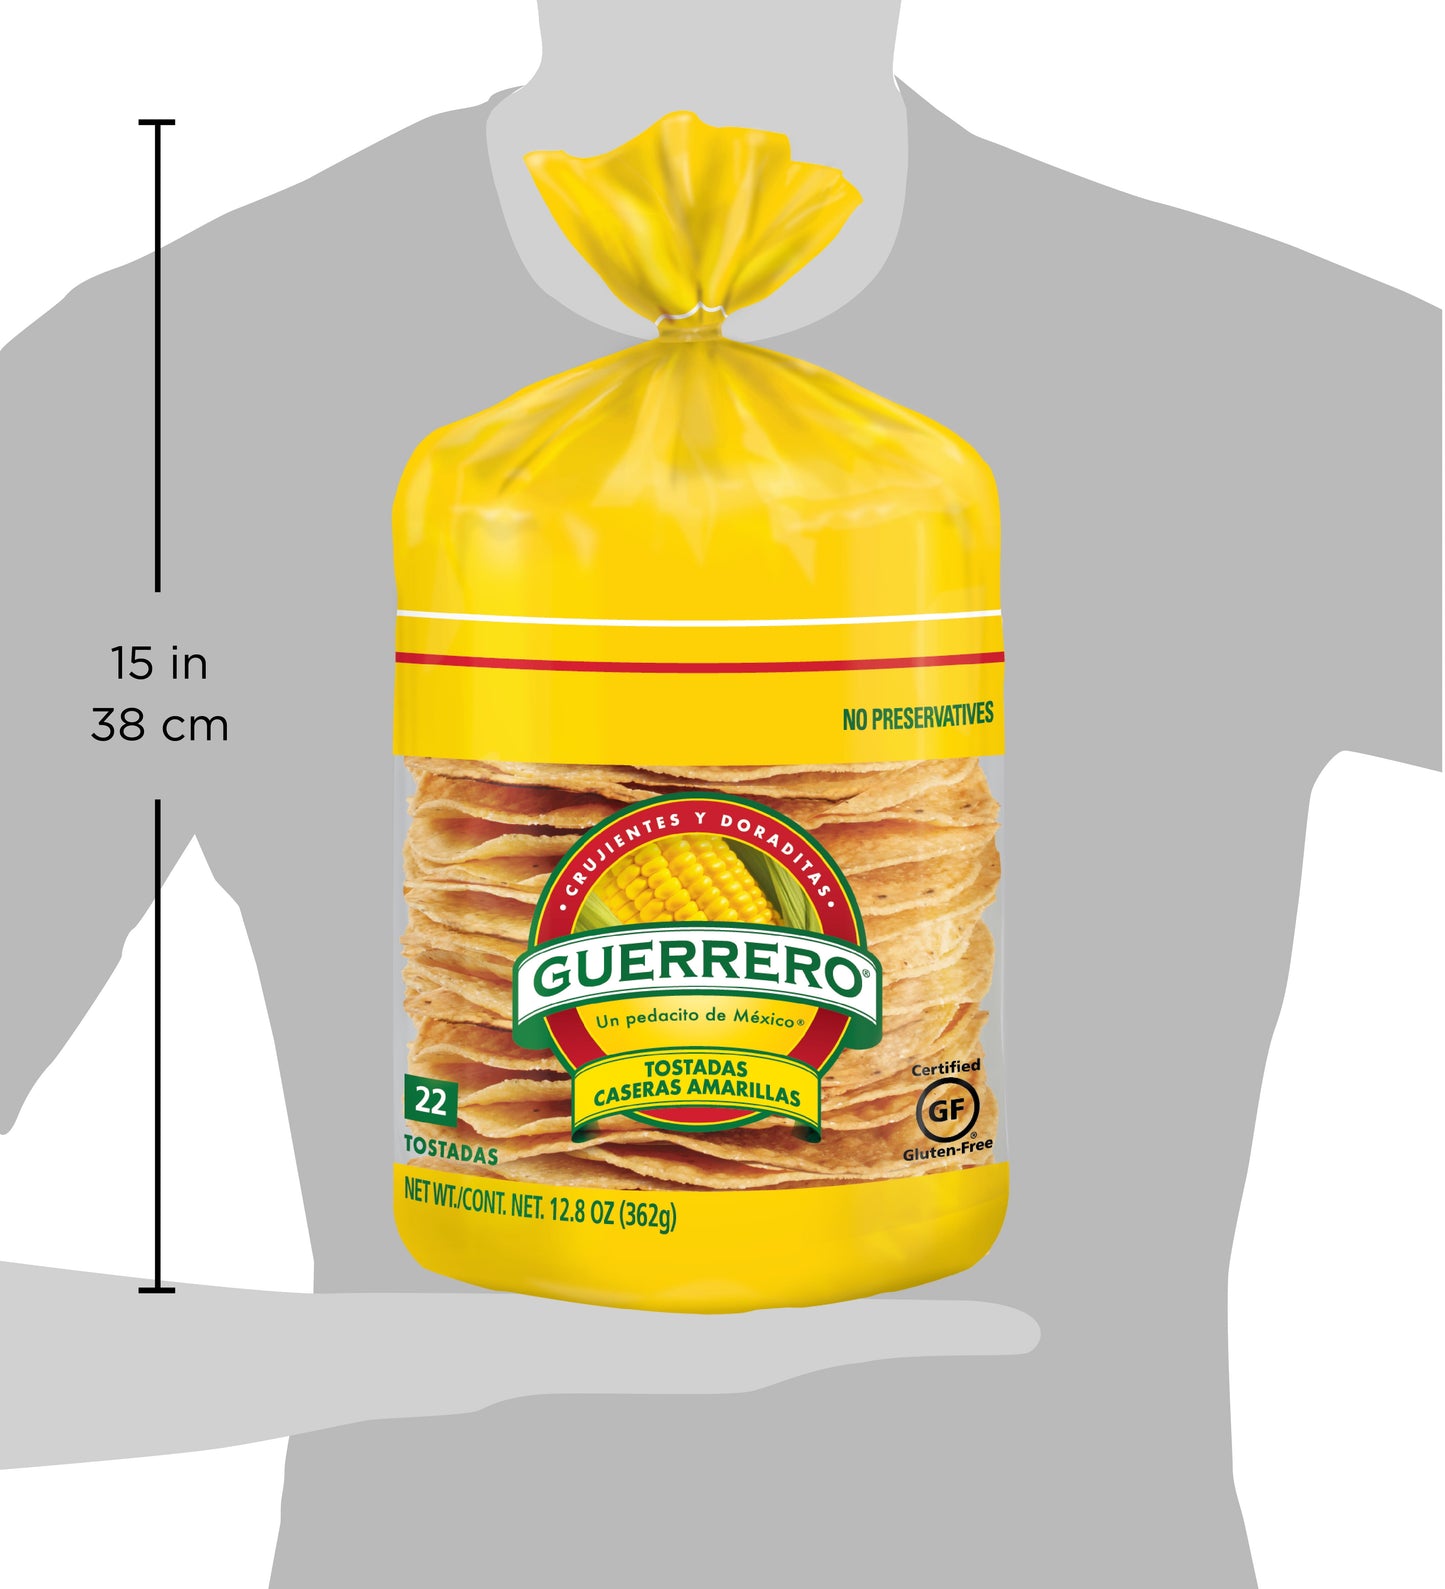 Guerrero Gluten-Free Yellow Tostadas Caseras Amarillas, 22 Count